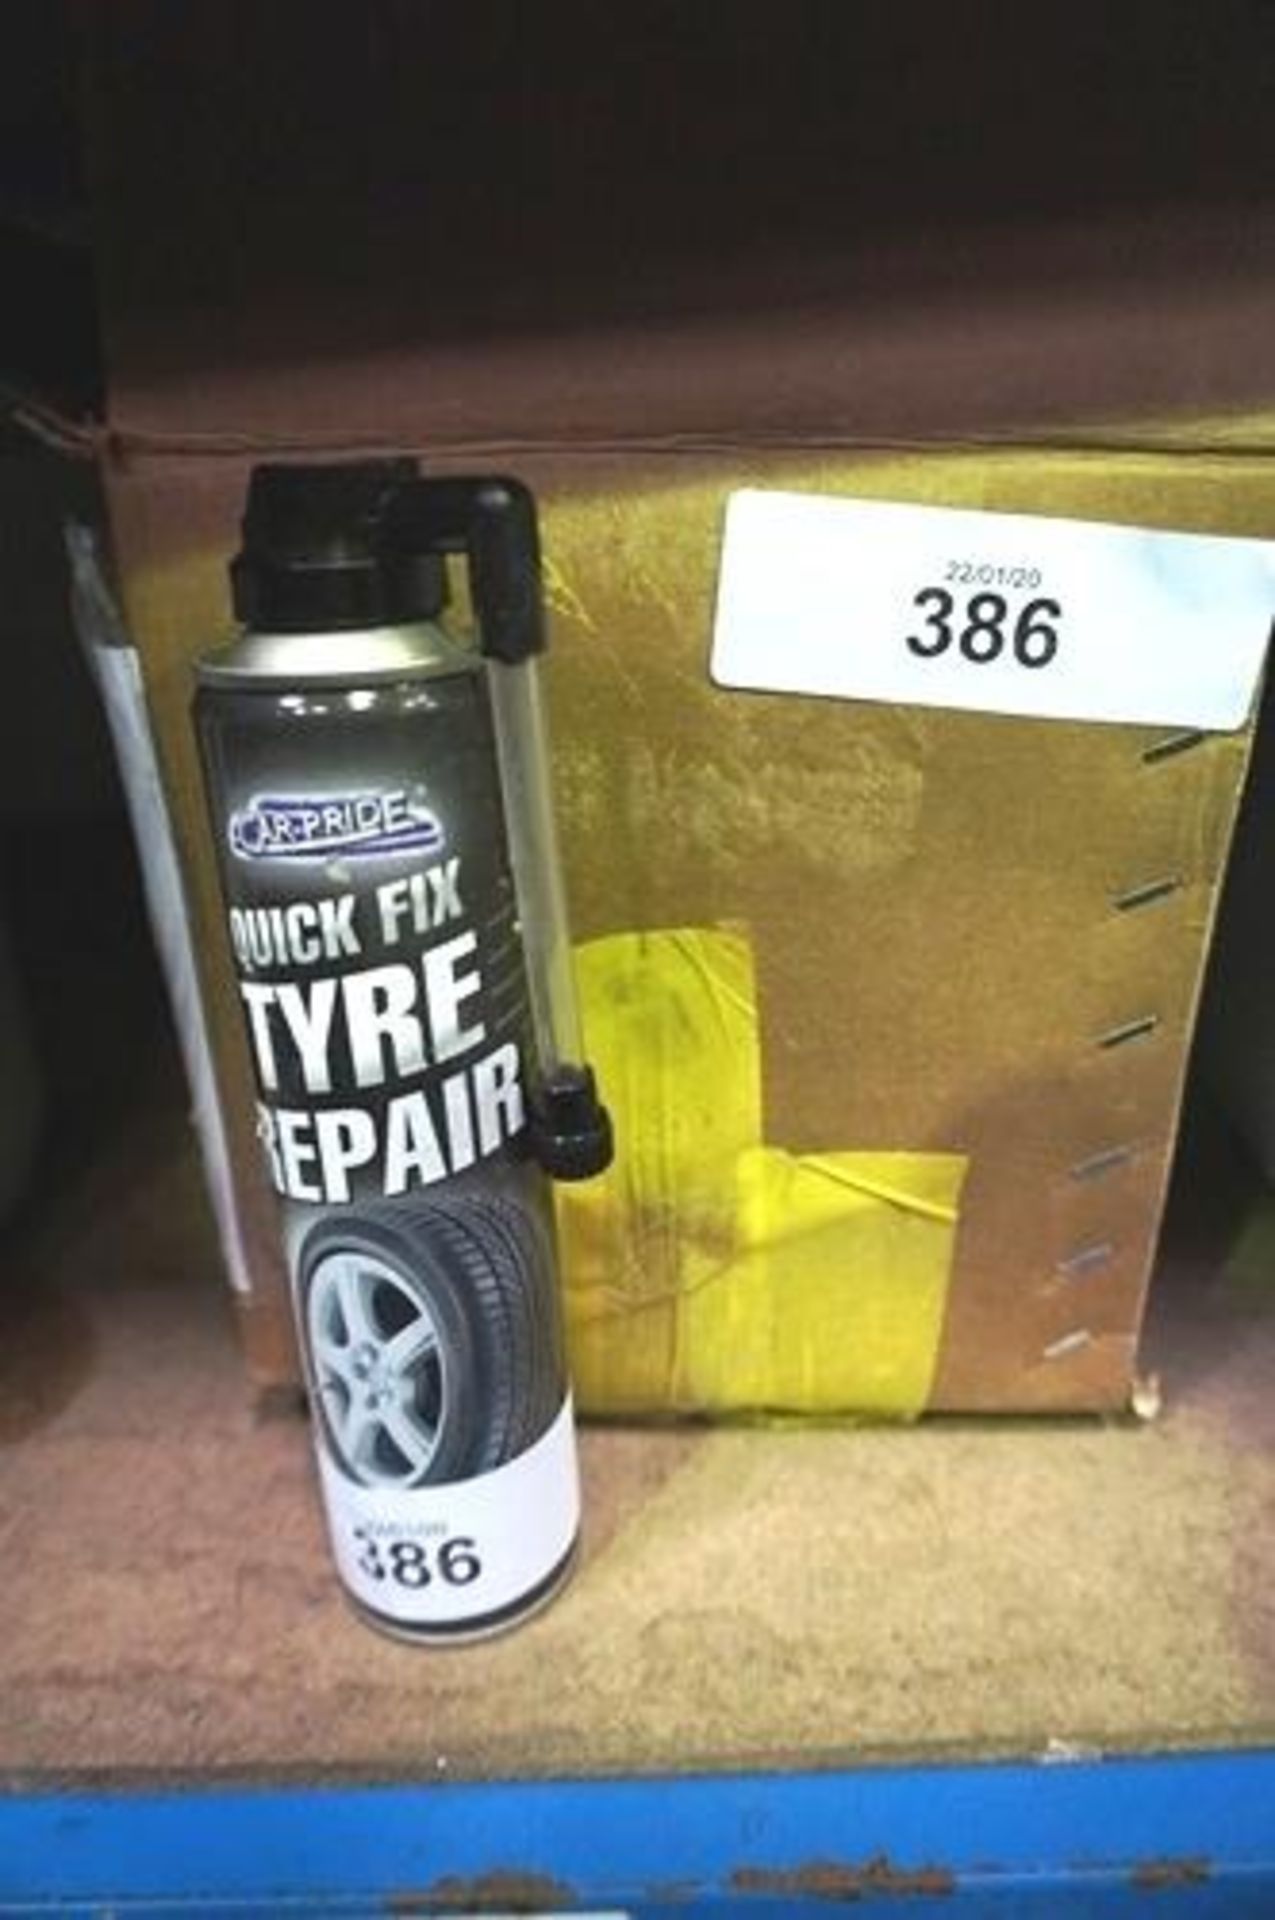 4 x Car Pride quick fix tyre repair - Sealed new (GS11)